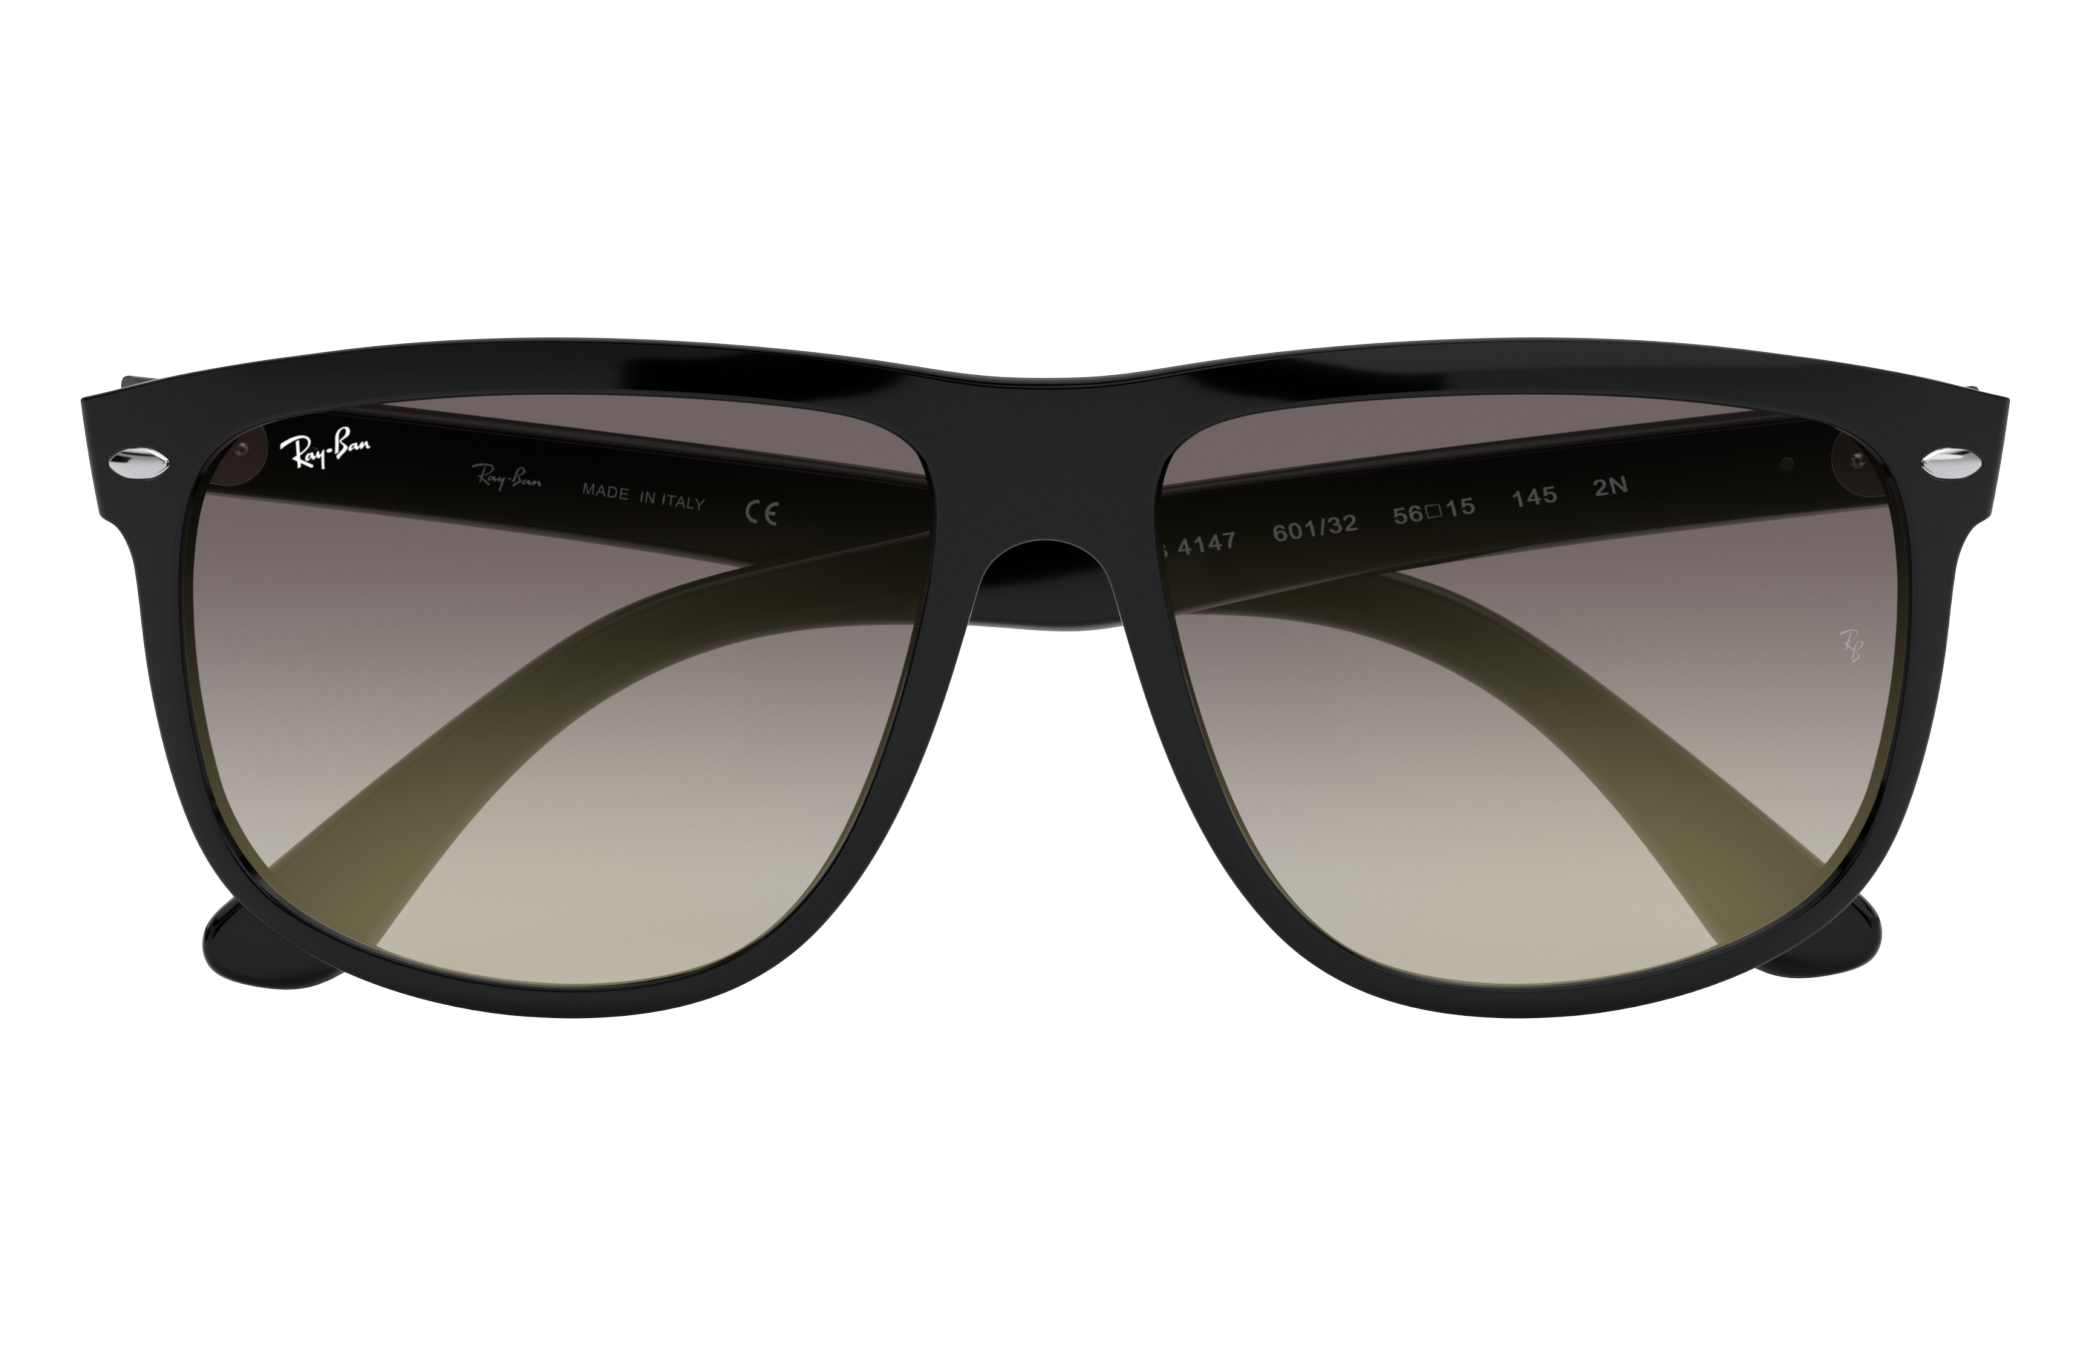 Ray-Ban Unisex Full Rim Square Plastic Black Sunglasses RB4147-601/32-60